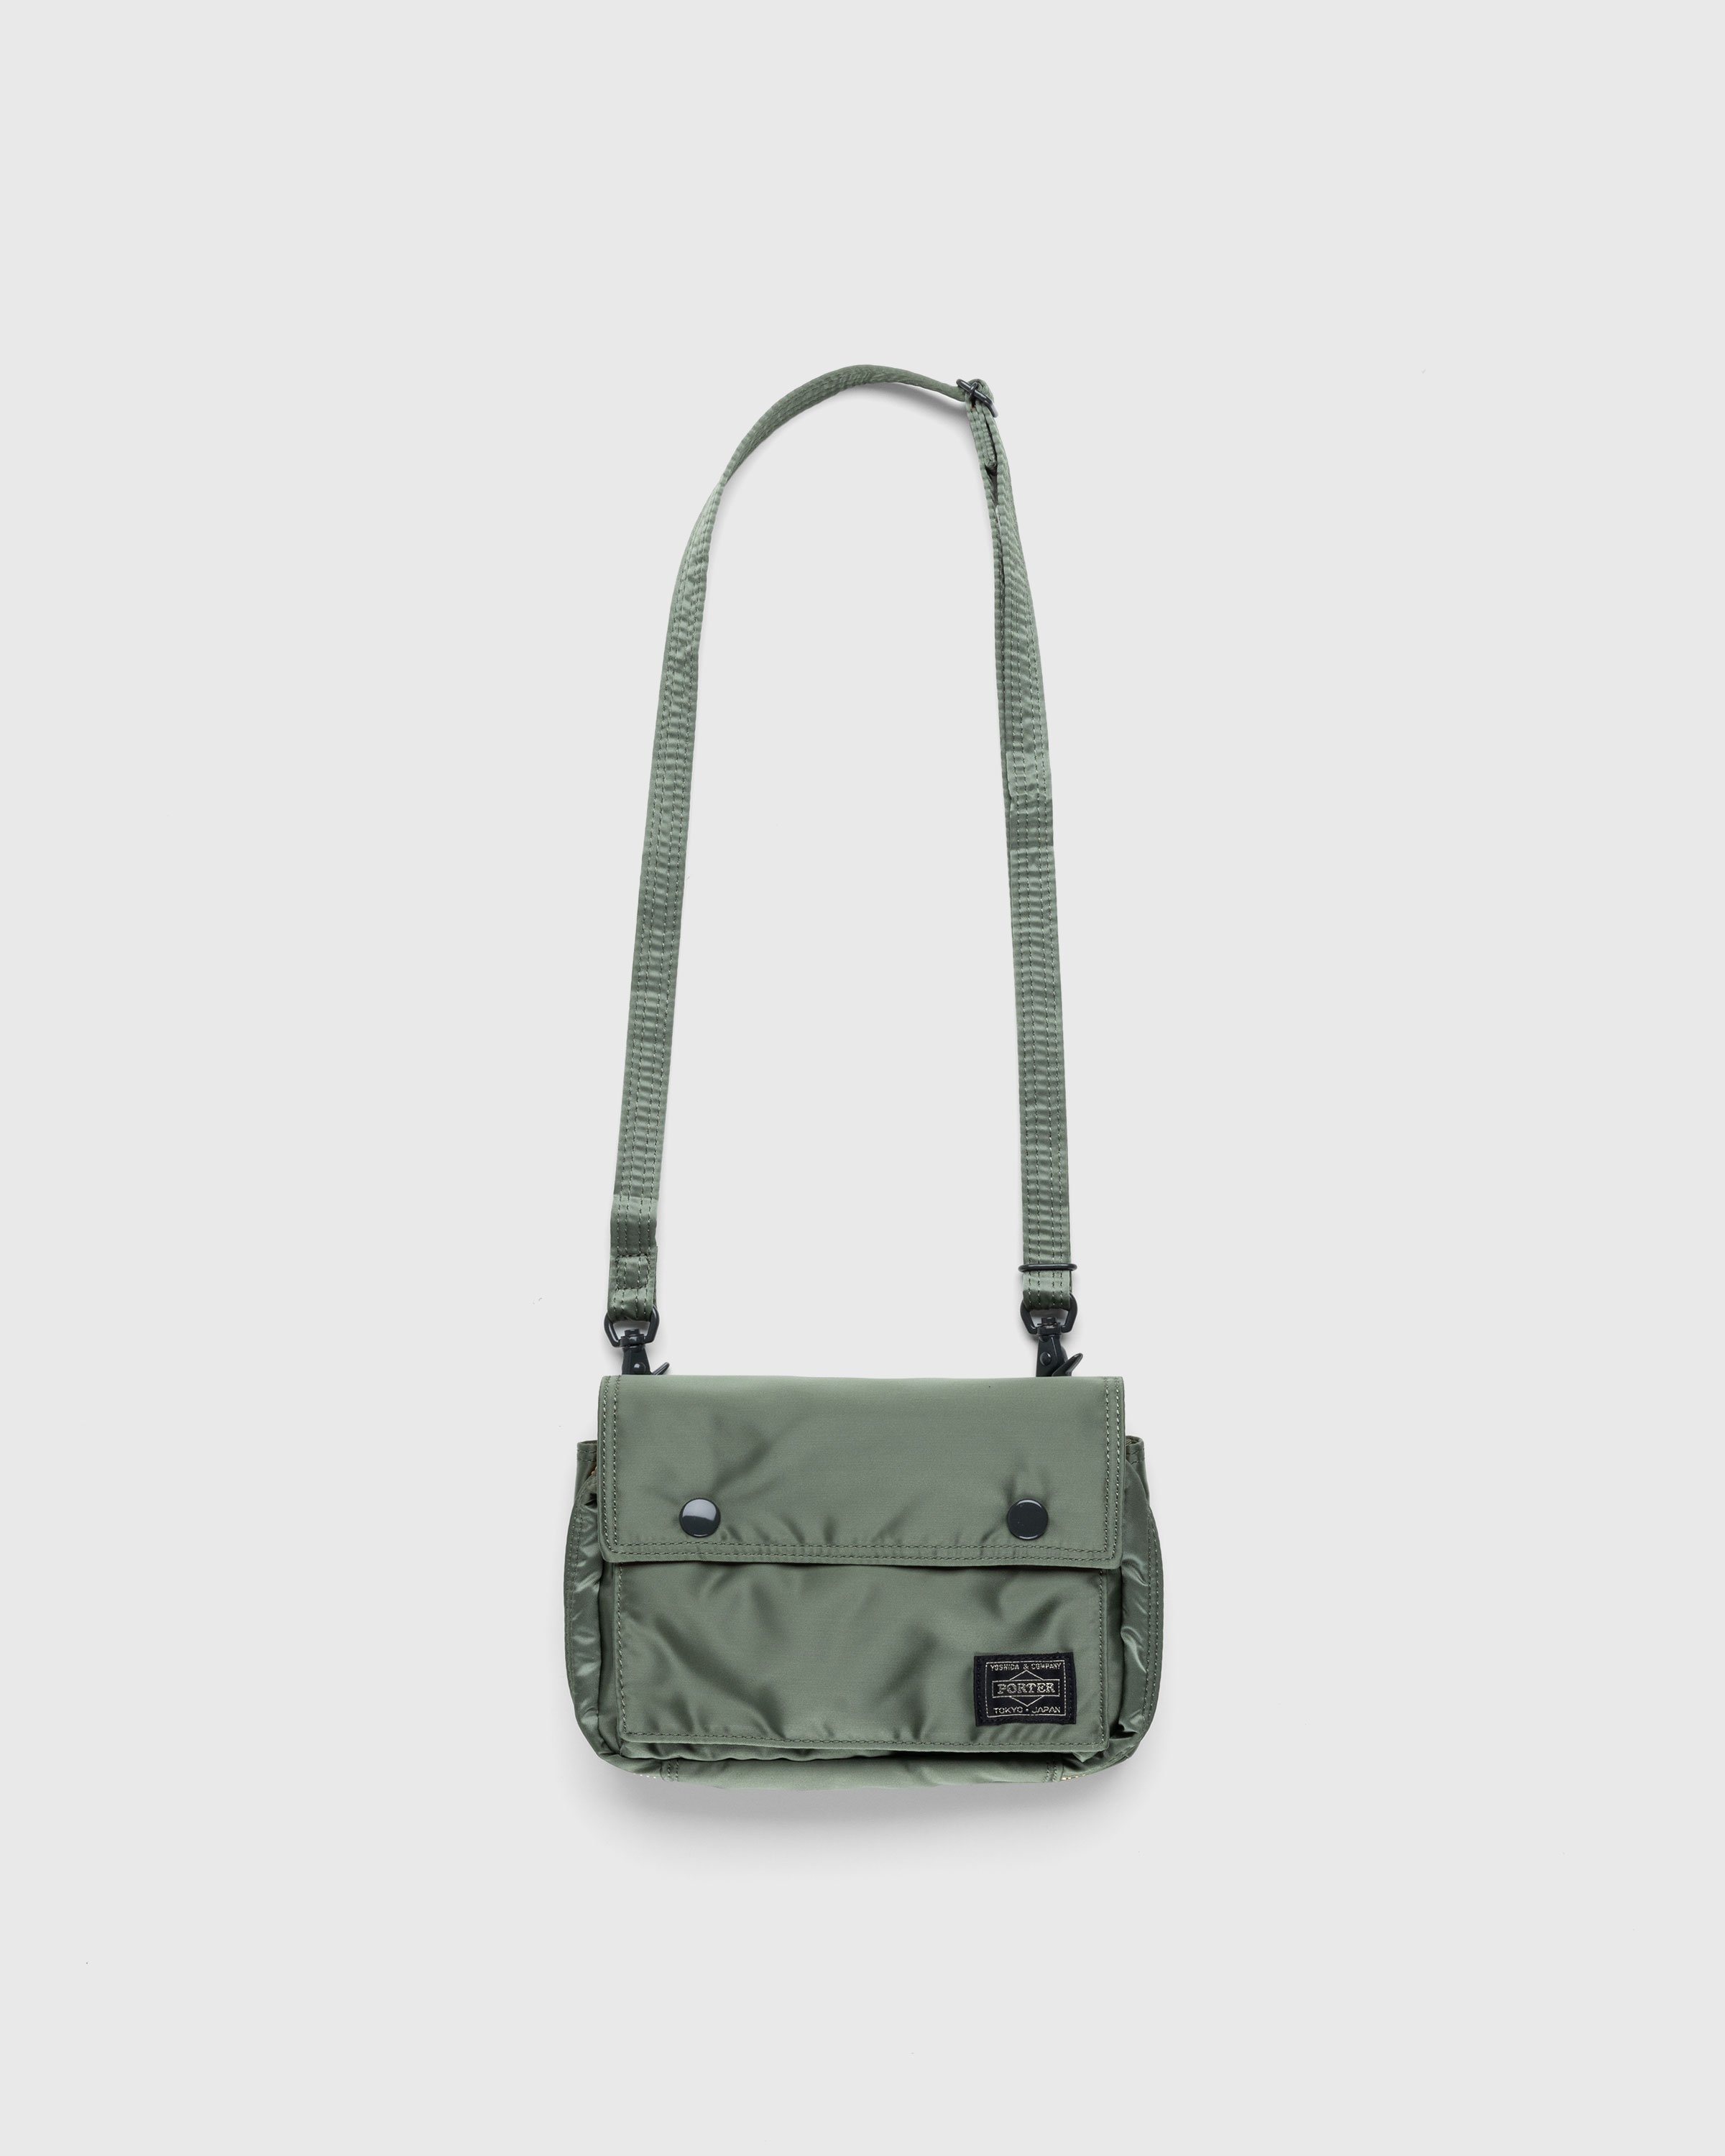 Porter-Yoshida & Co. - TANKER SHOULDER BAG - Accessories - Green - Image 1